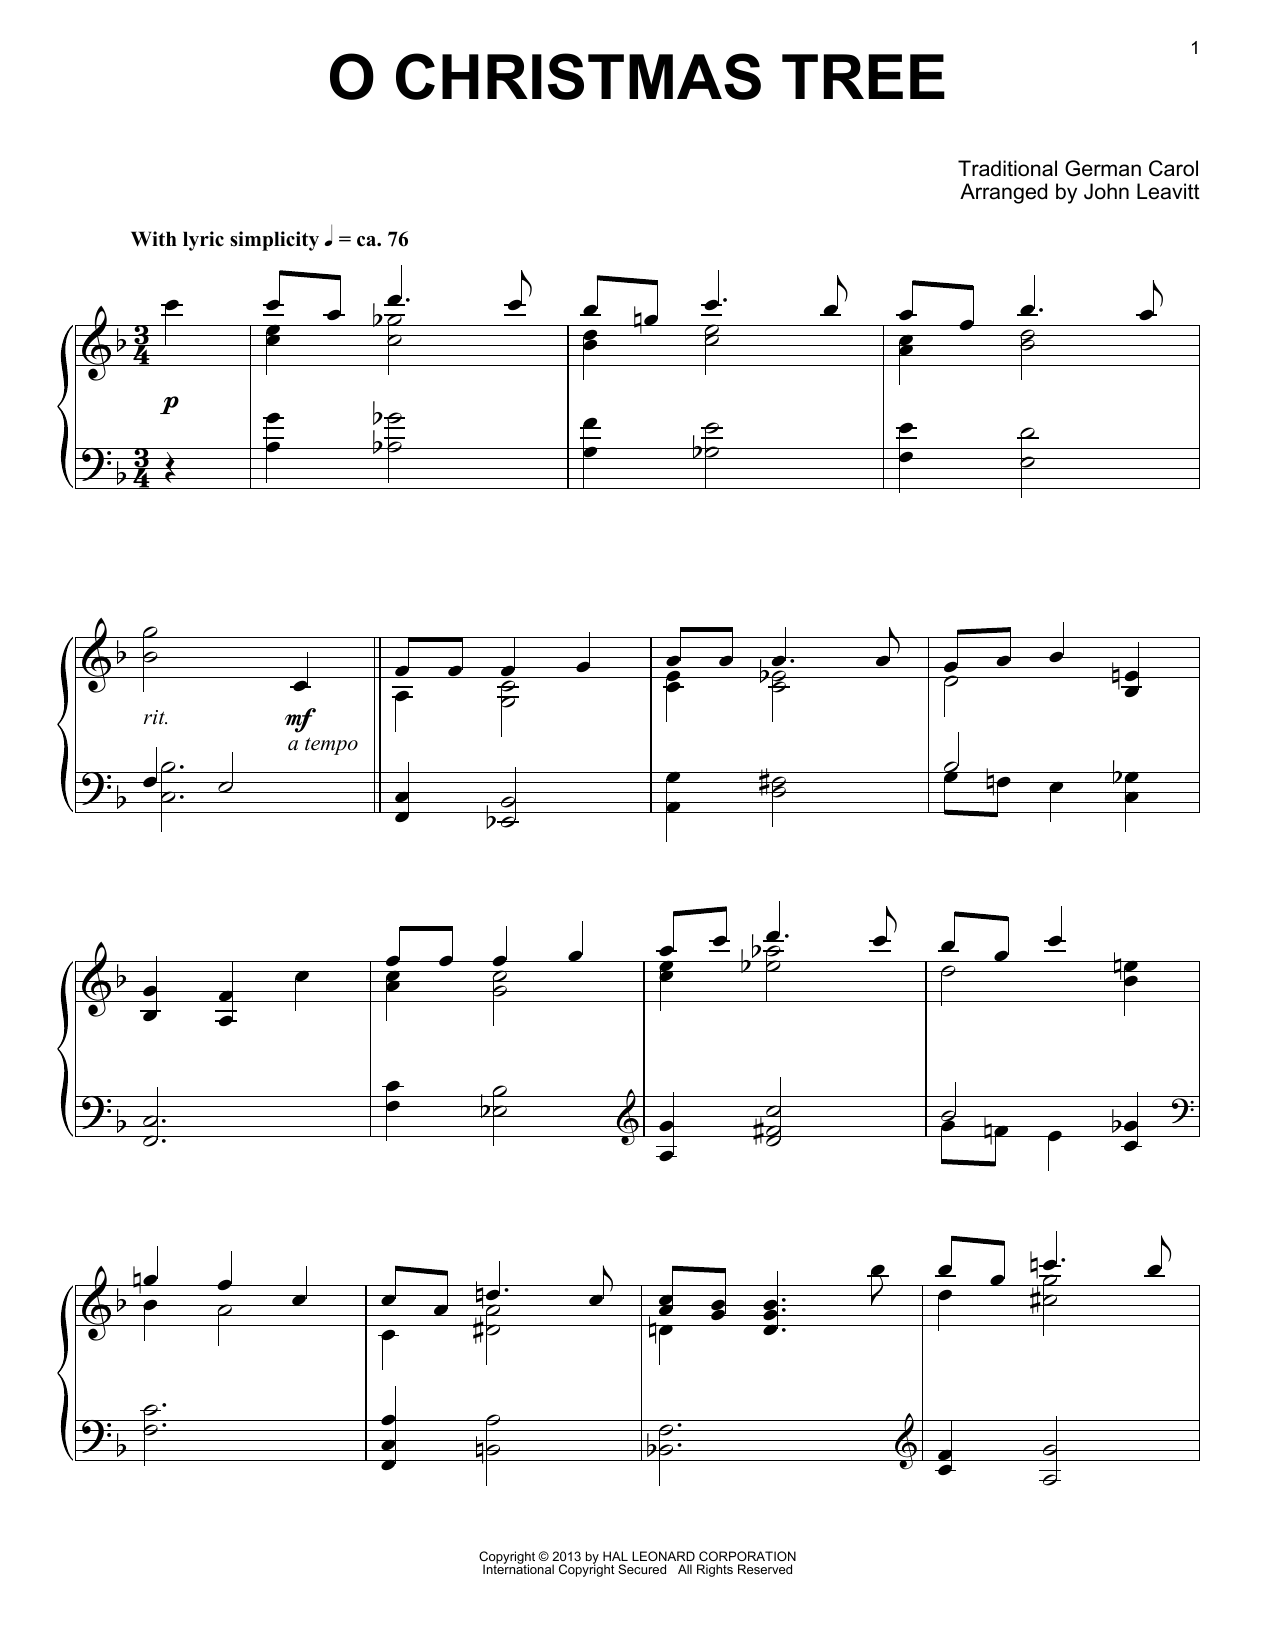 Traditional German Carol O Christmas Tree sheet music notes and chords. Download Printable PDF.